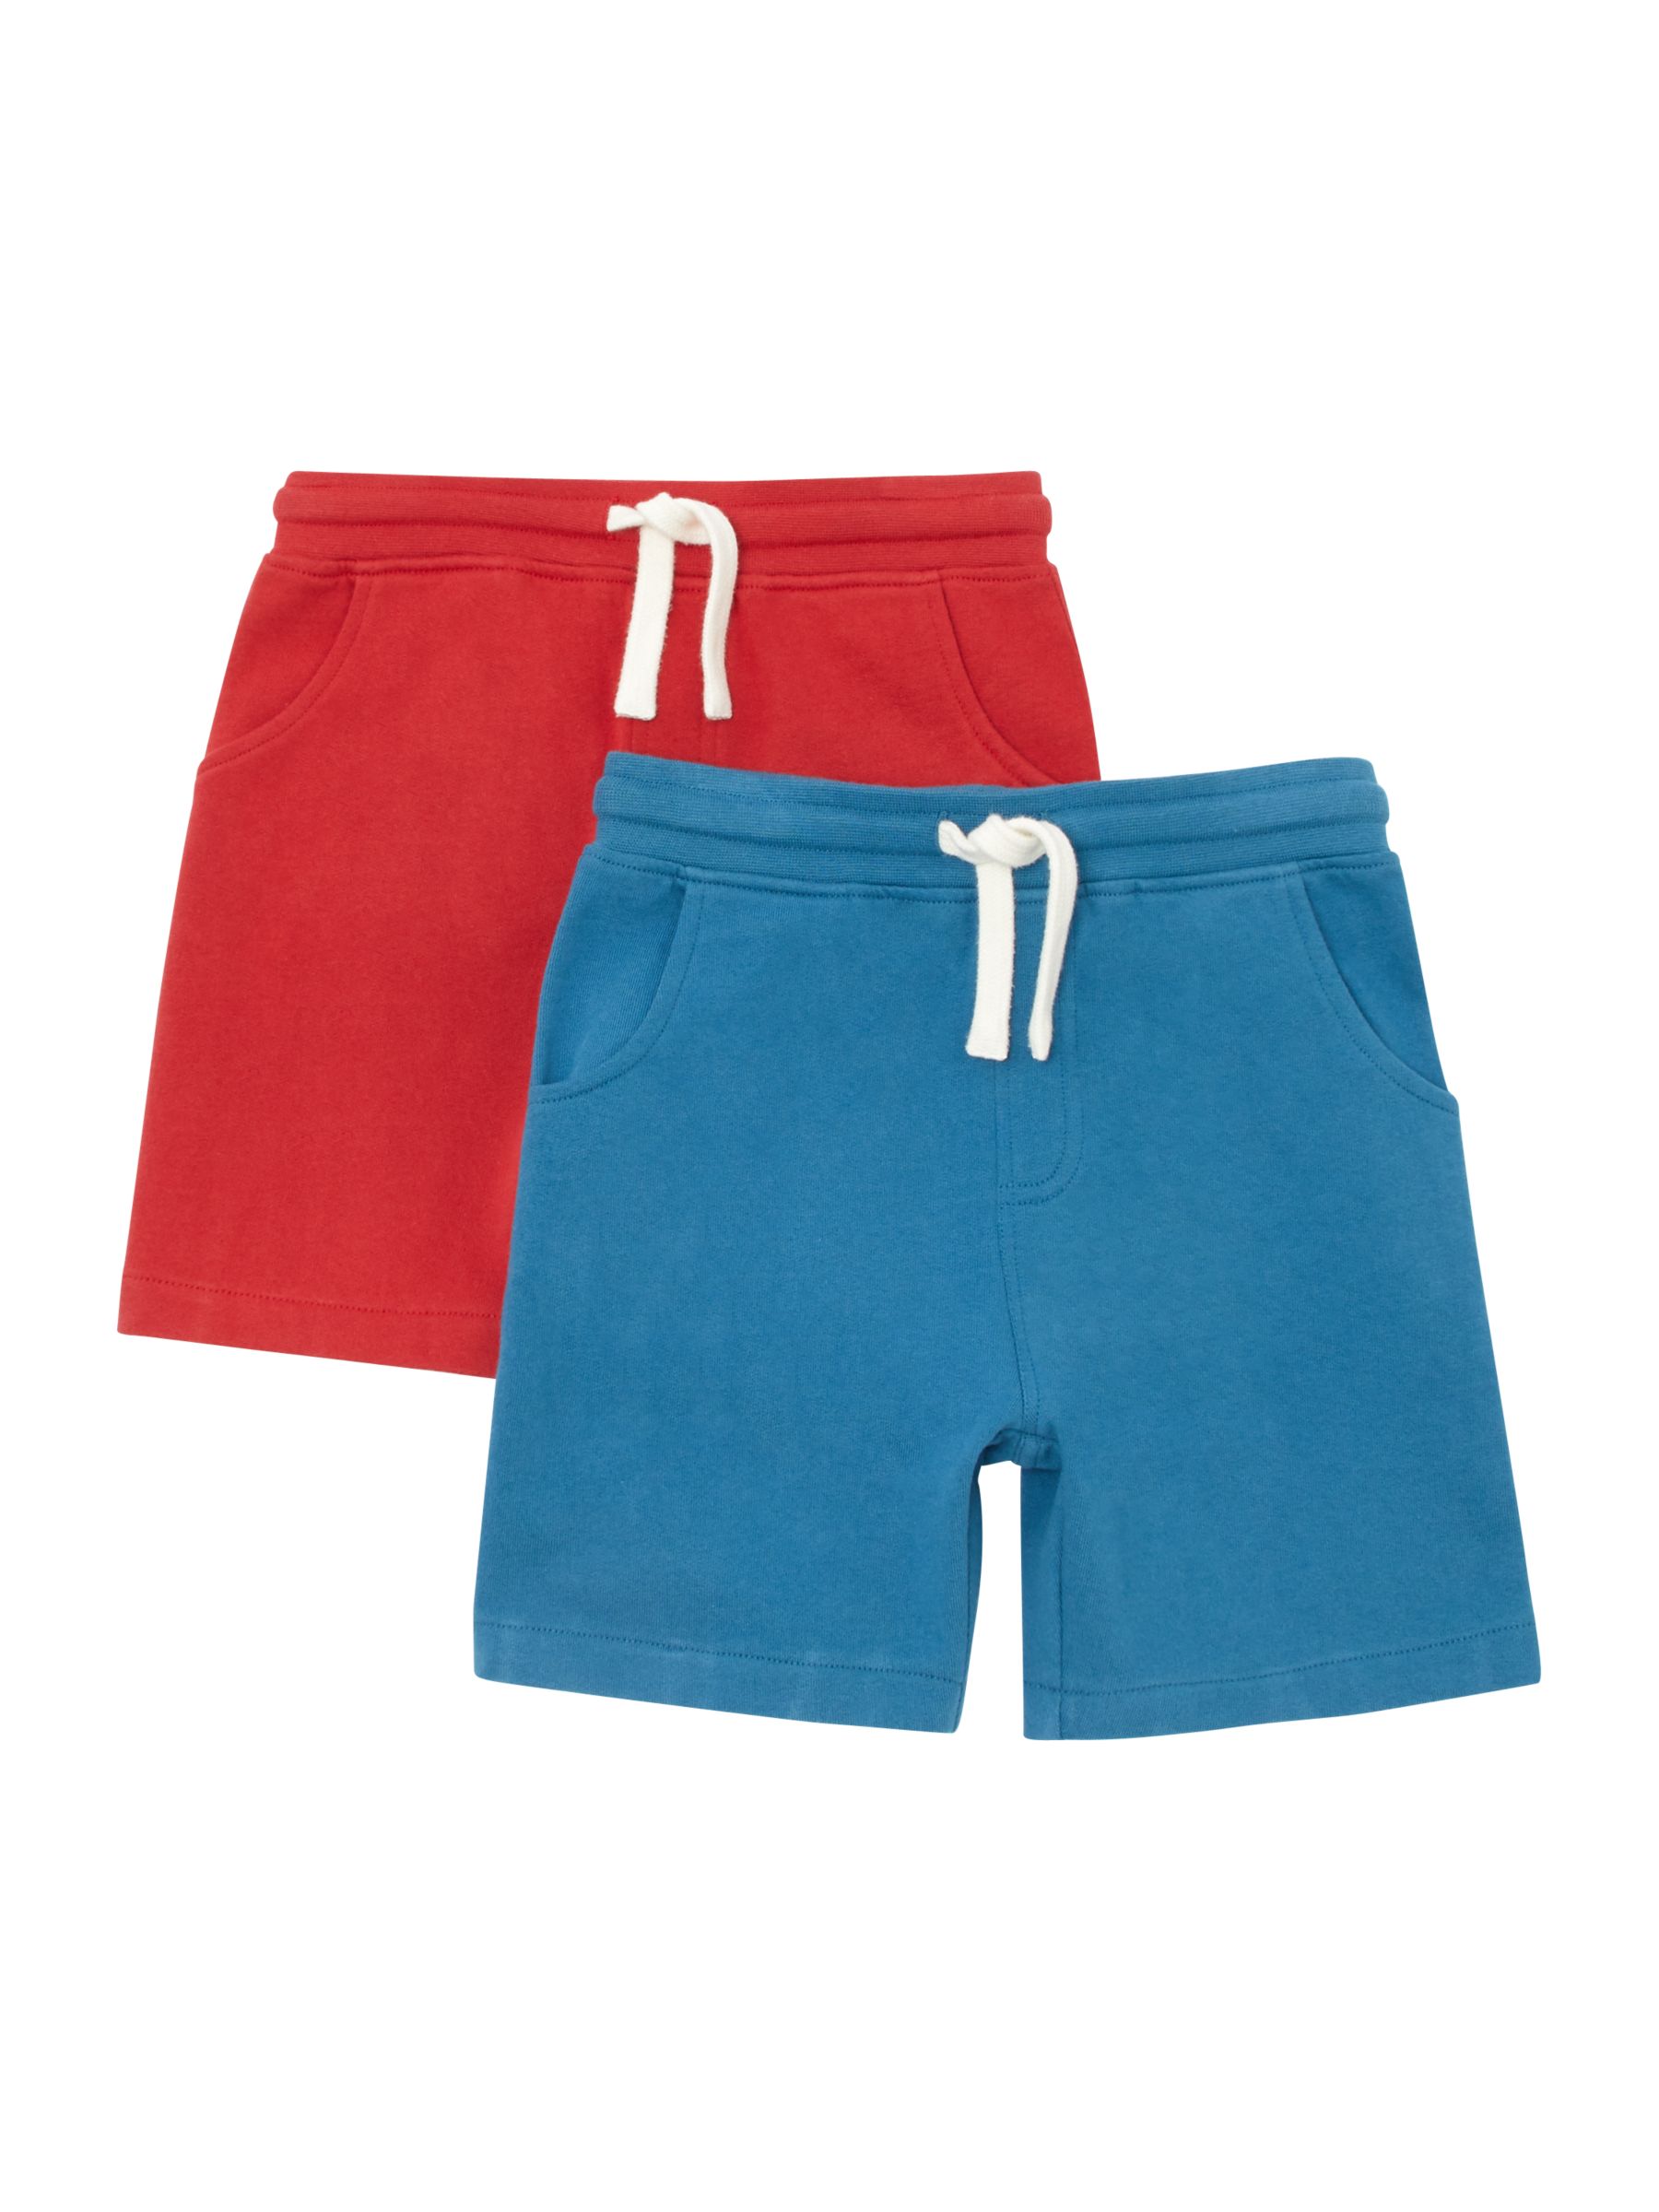 John Lewis Boys' Jersey Shorts, Pack of 